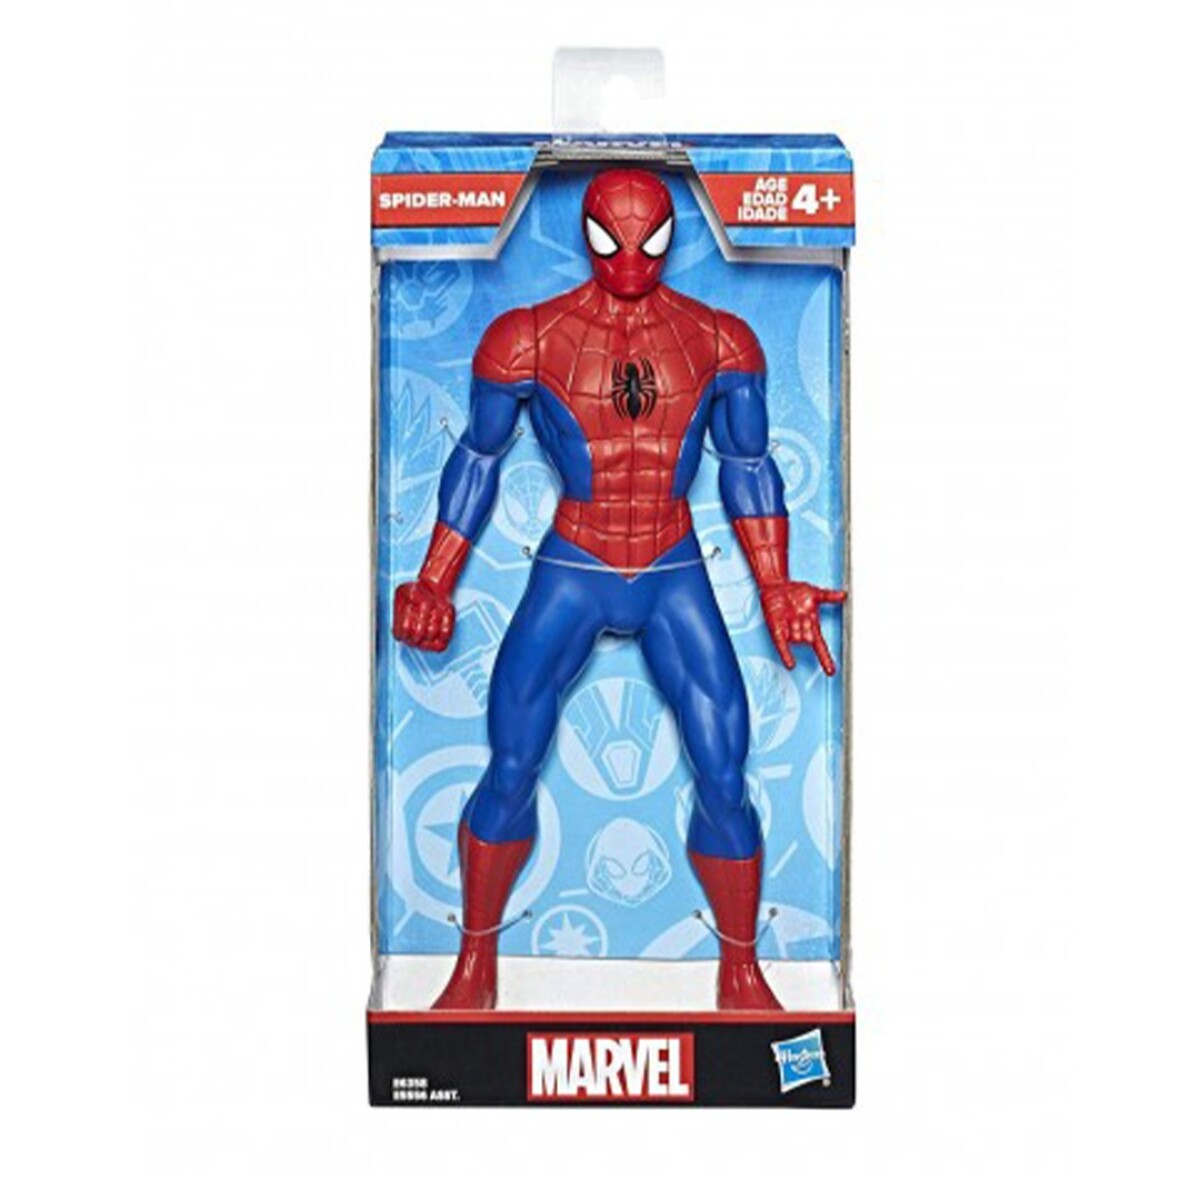 Spidermann 23cm Avenger hombre araña figura superheore - 001 